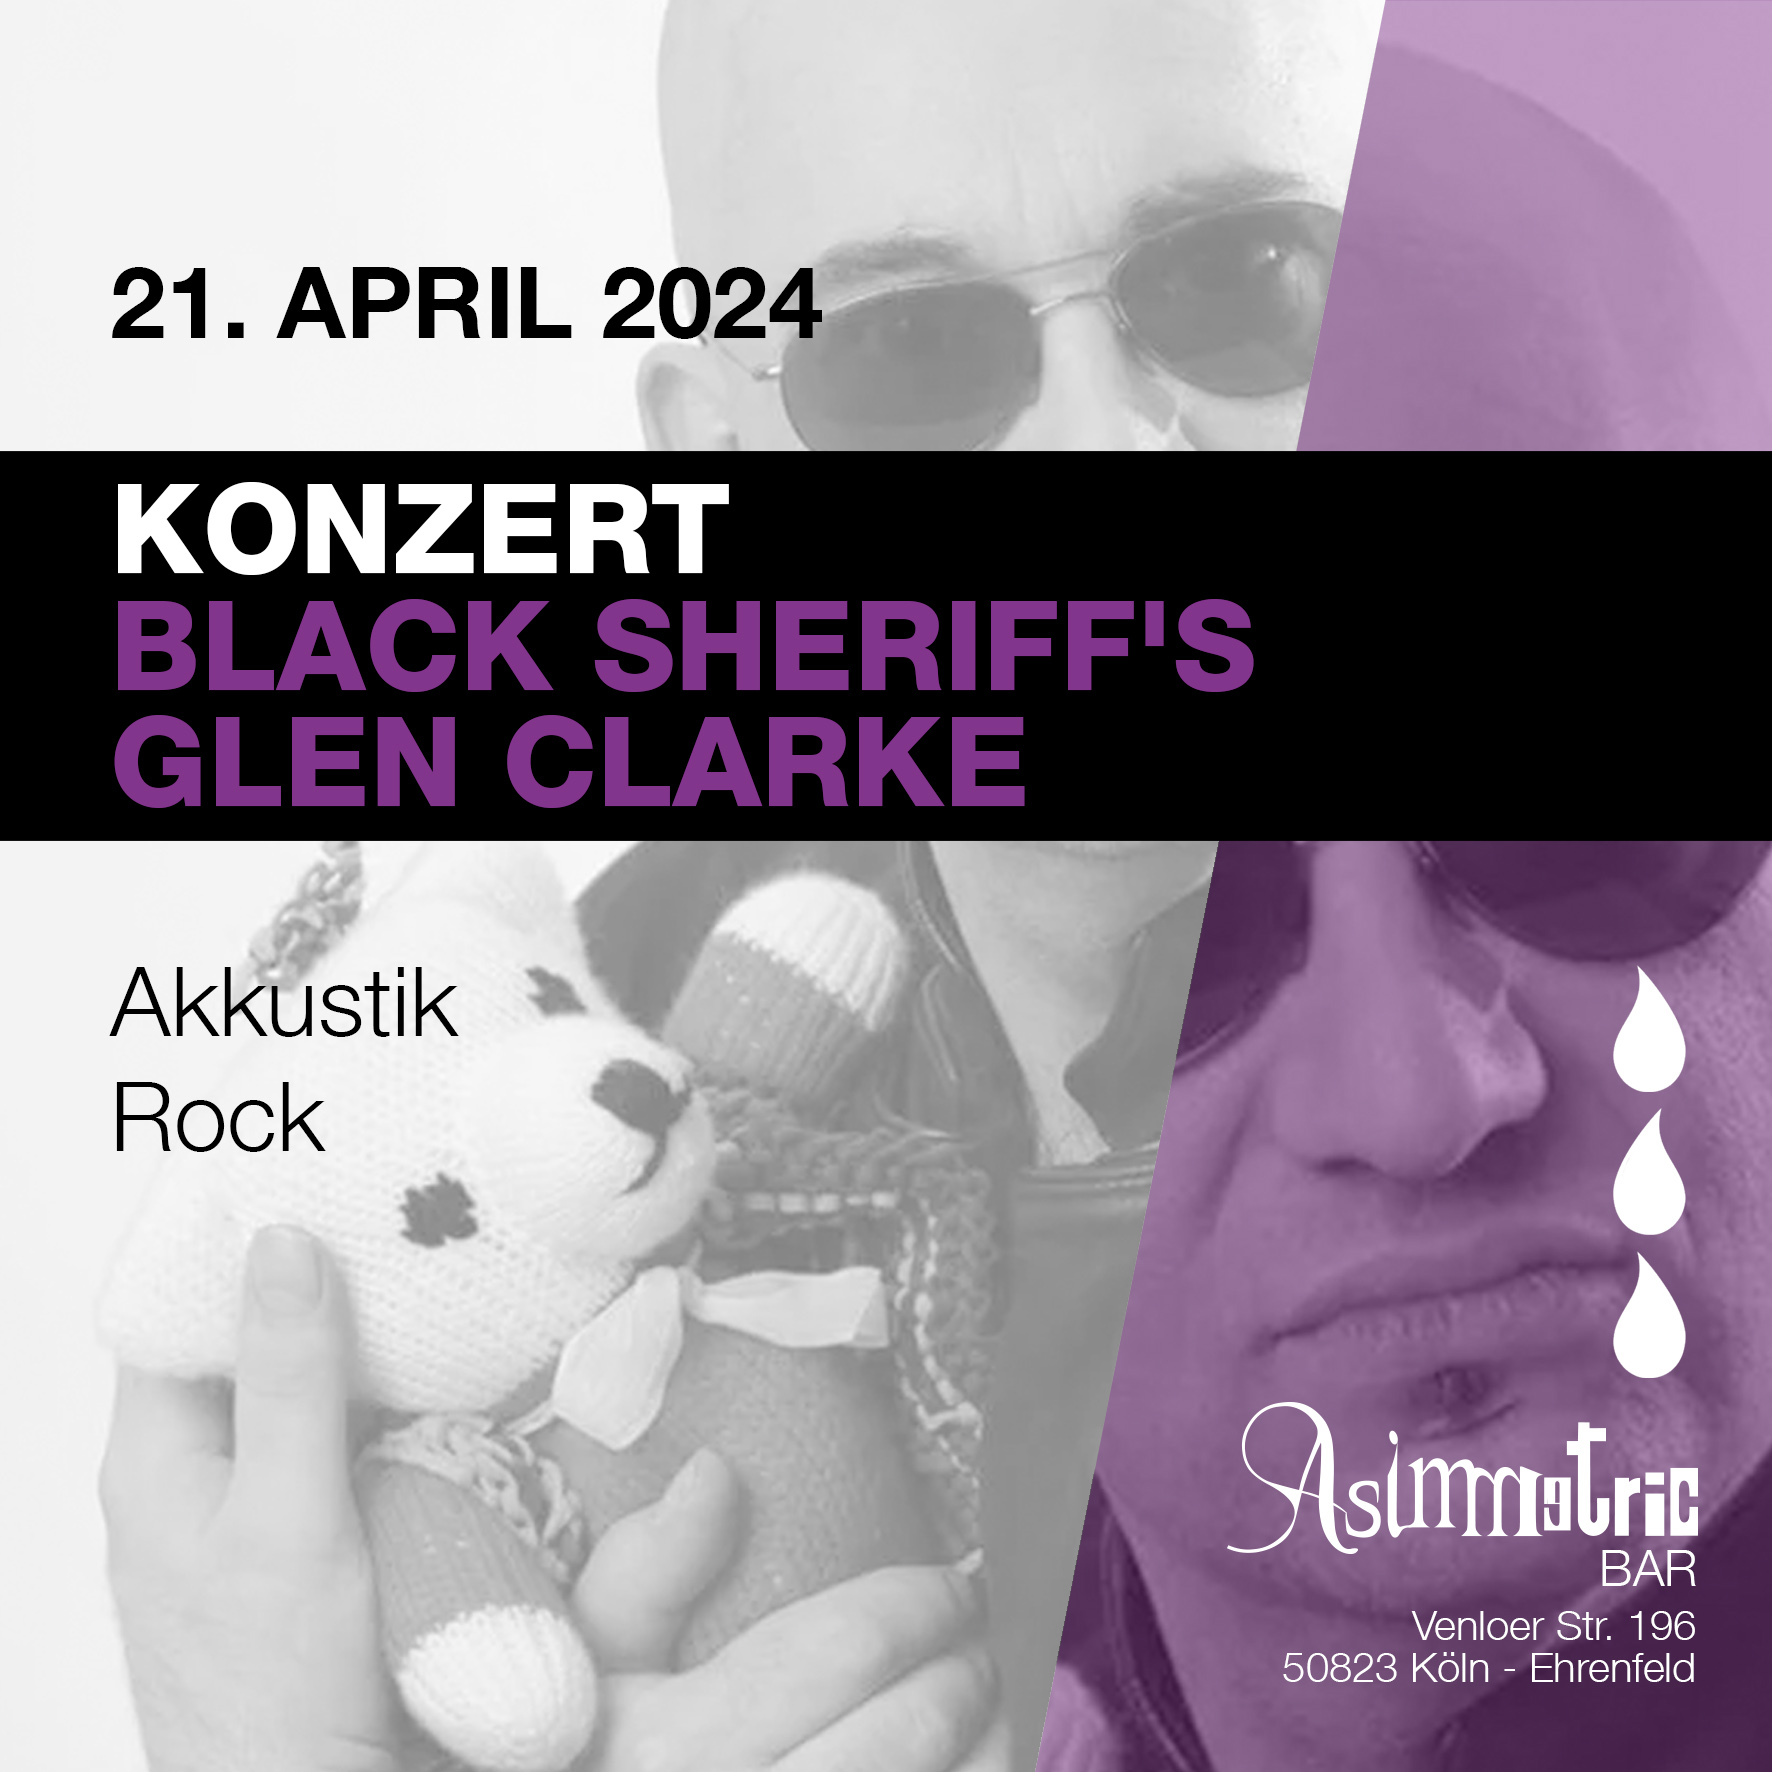 Konzert Black Sheriff's Glen Clarke - Asimmetric Bar - 21.4.2024